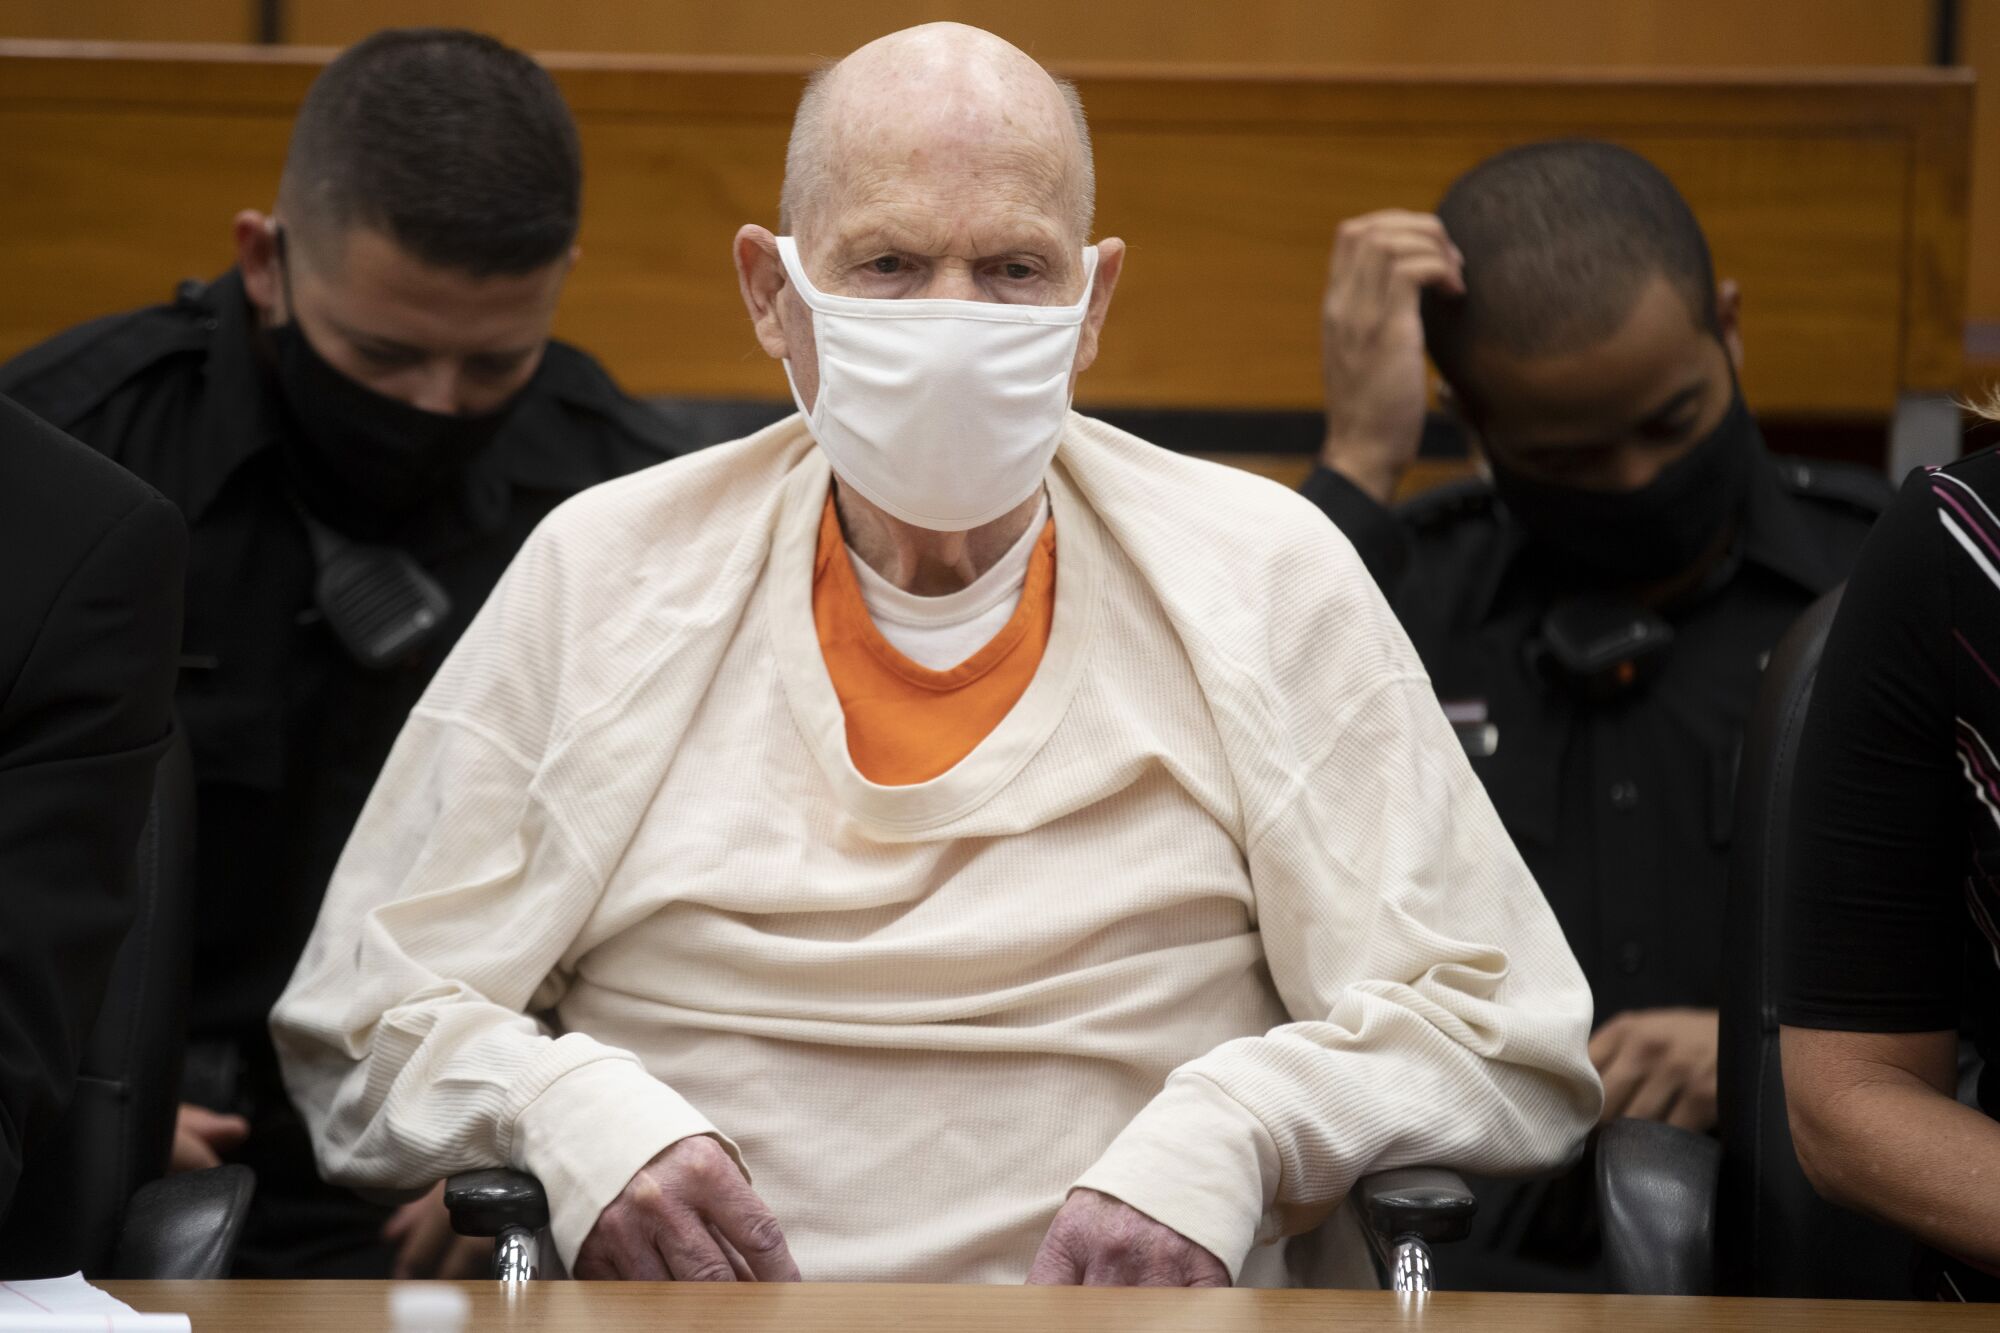 A masked Joseph James DeAngelo Jr. sits in a courtroom